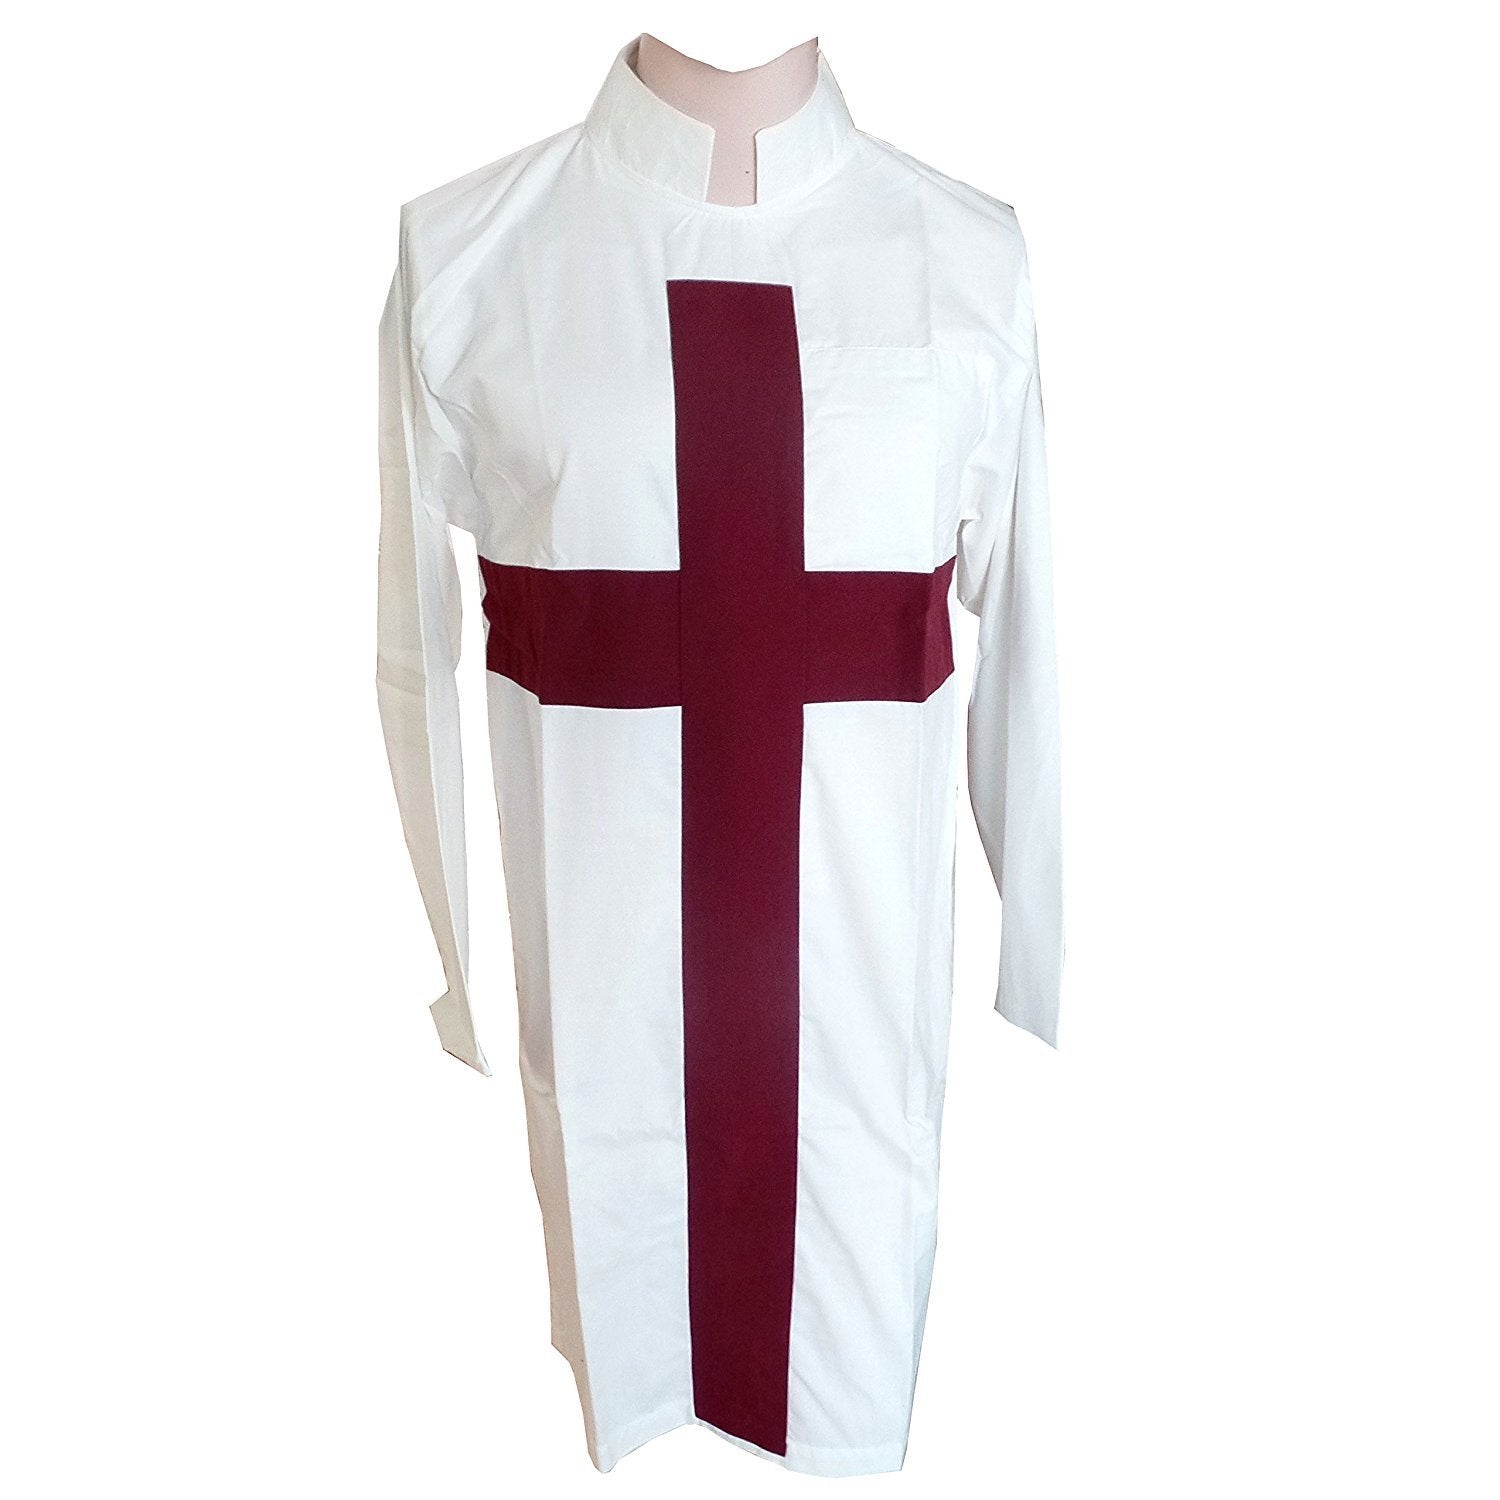 Knight Templar Priests Tunic - Red Cross & White - Bricks Masons